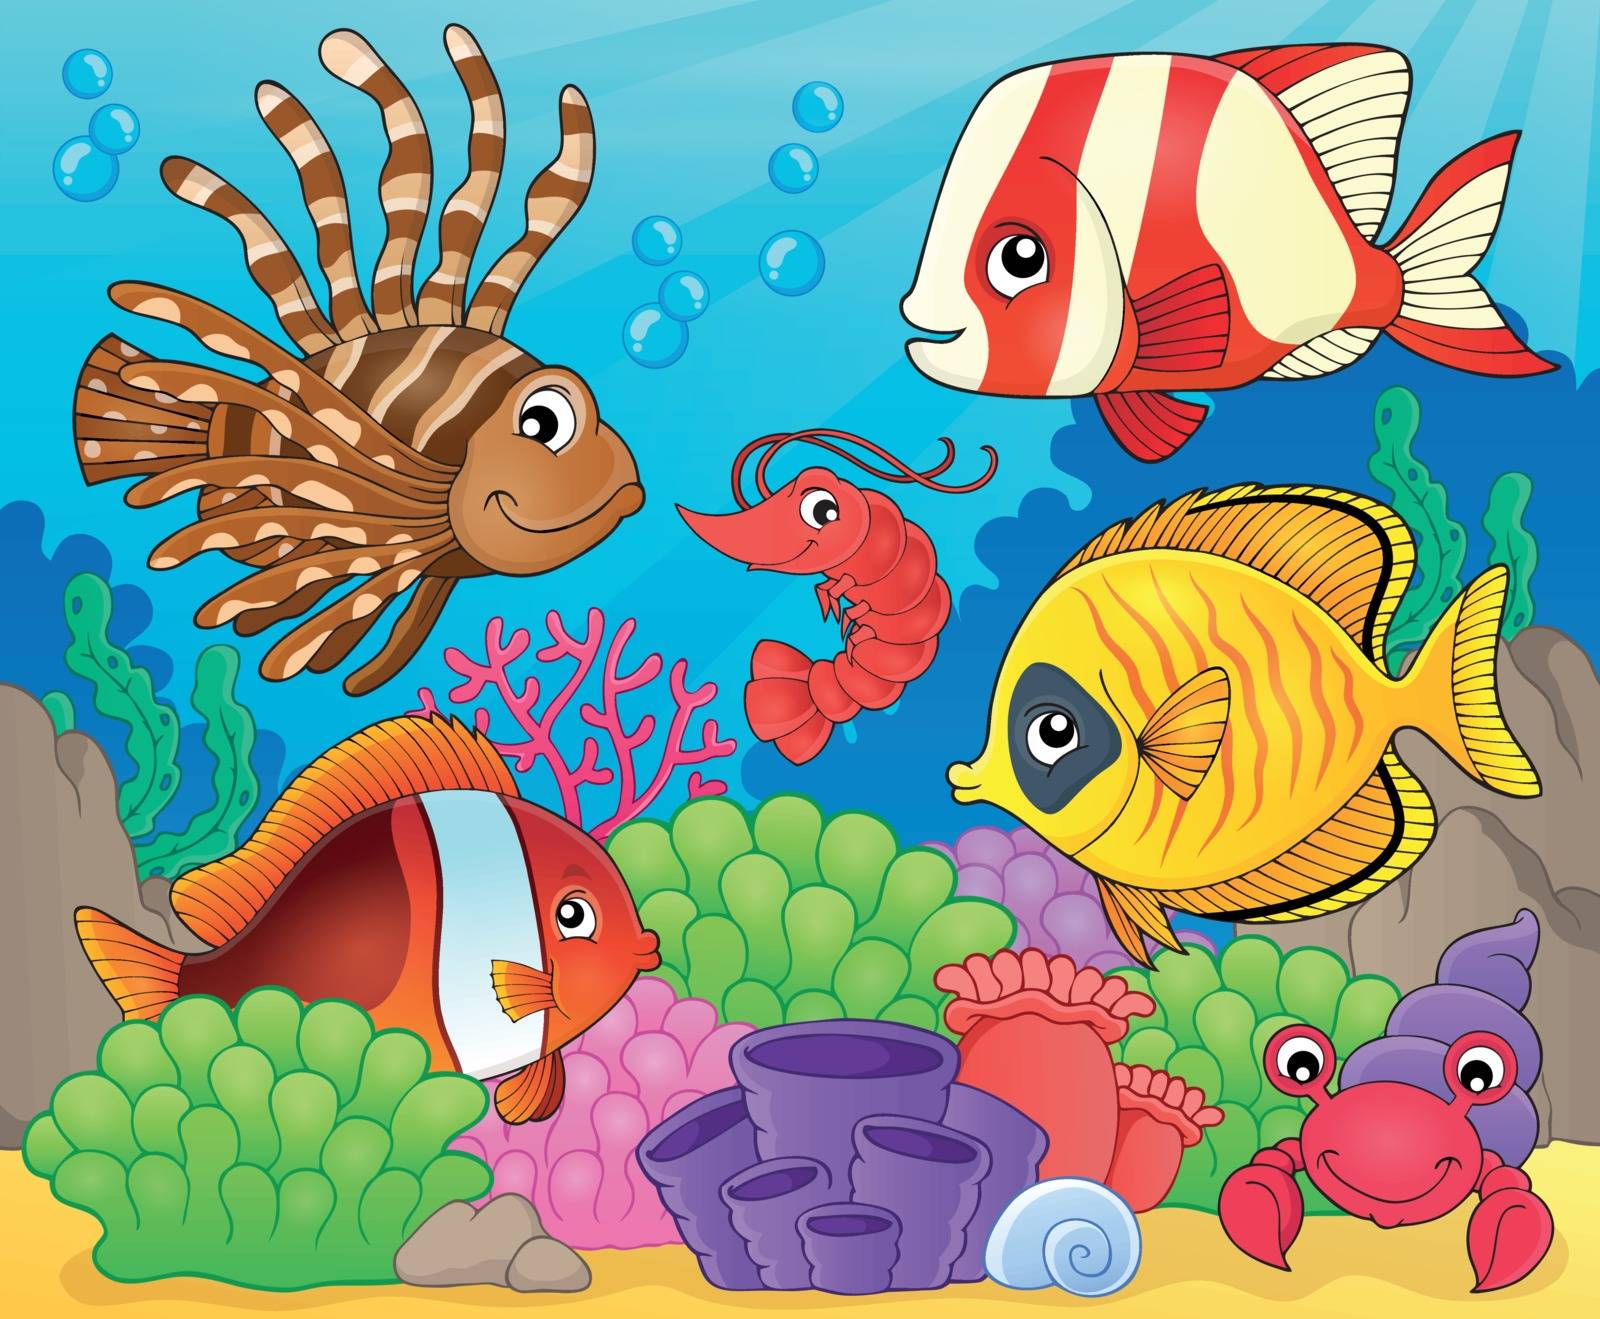 Coral fauna theme image 8 - eps10 vector illustration.